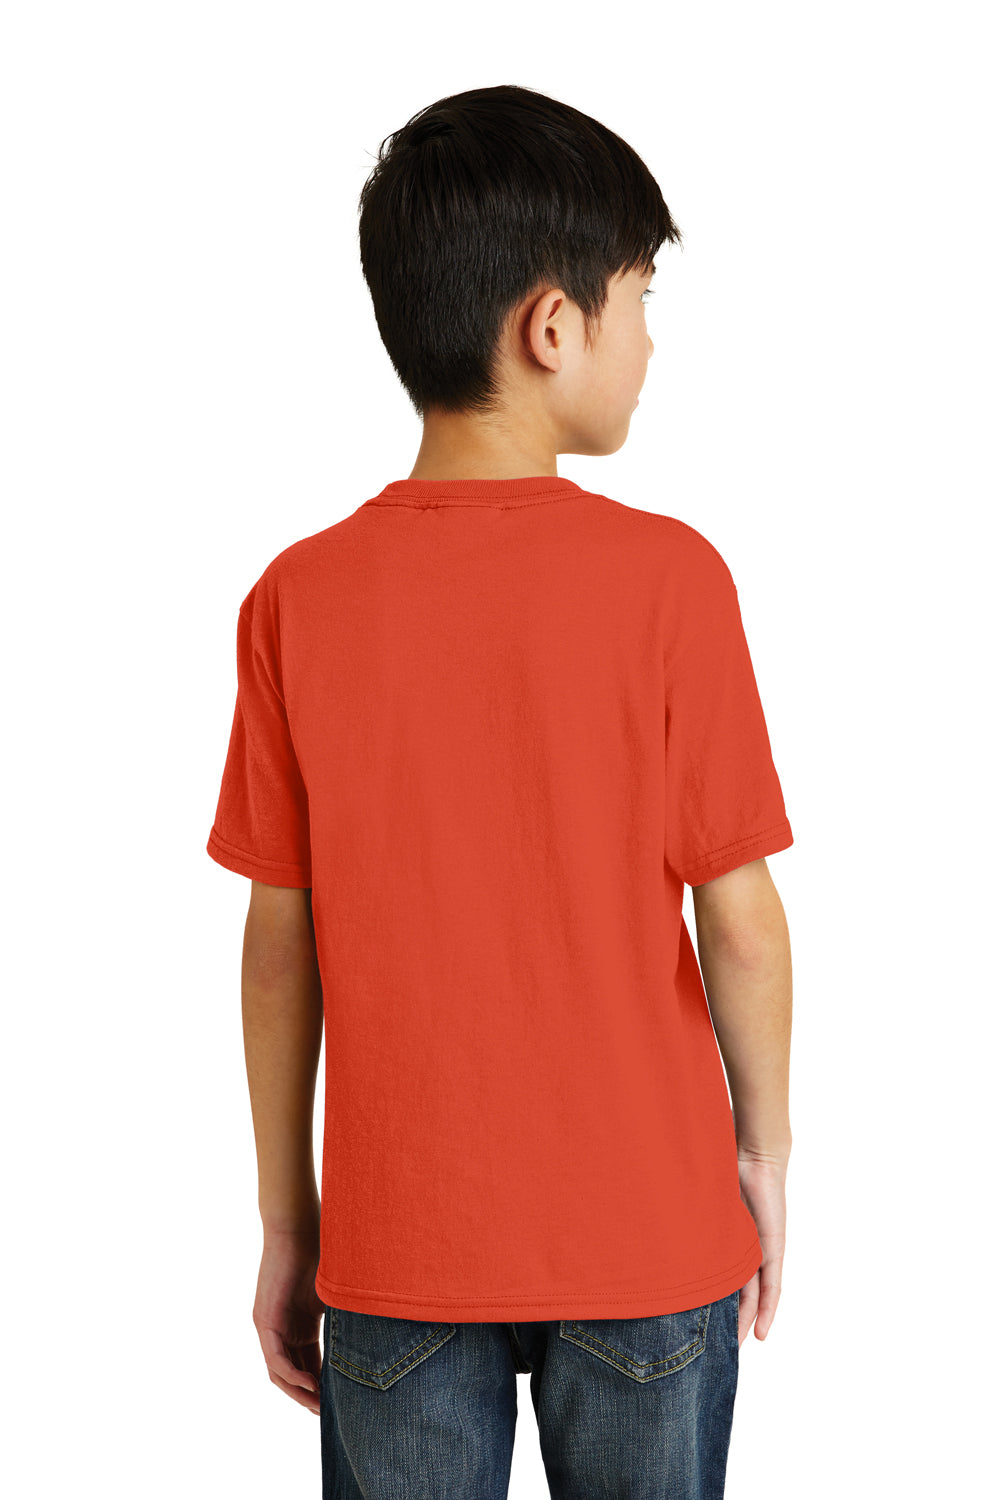 Port & Company PC55Y Youth Core Short Sleeve Crewneck T-Shirt Orange Back